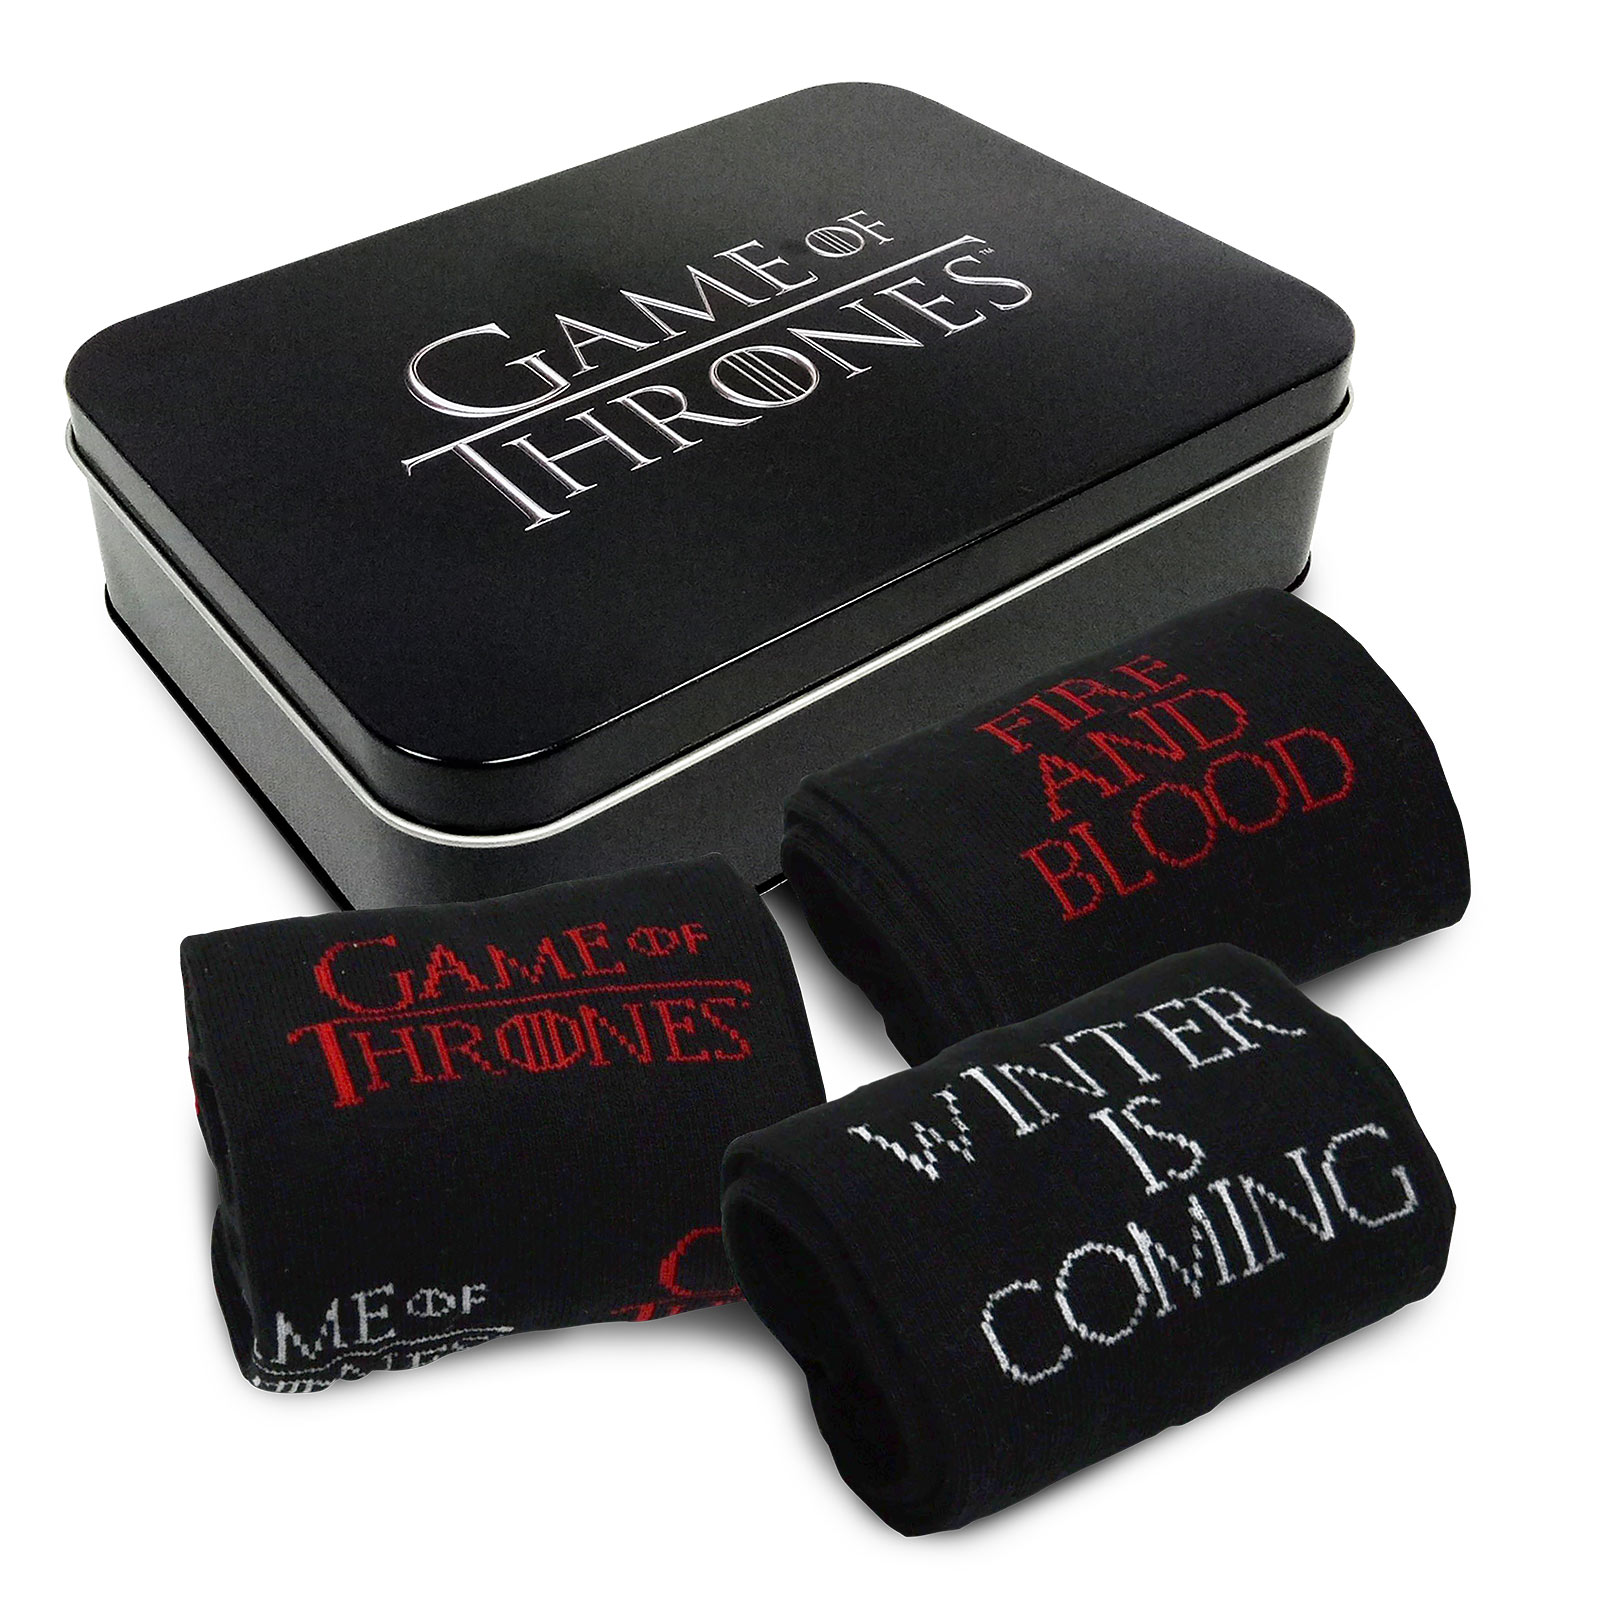 Game of Thrones - 3 pair of socks in a metal box